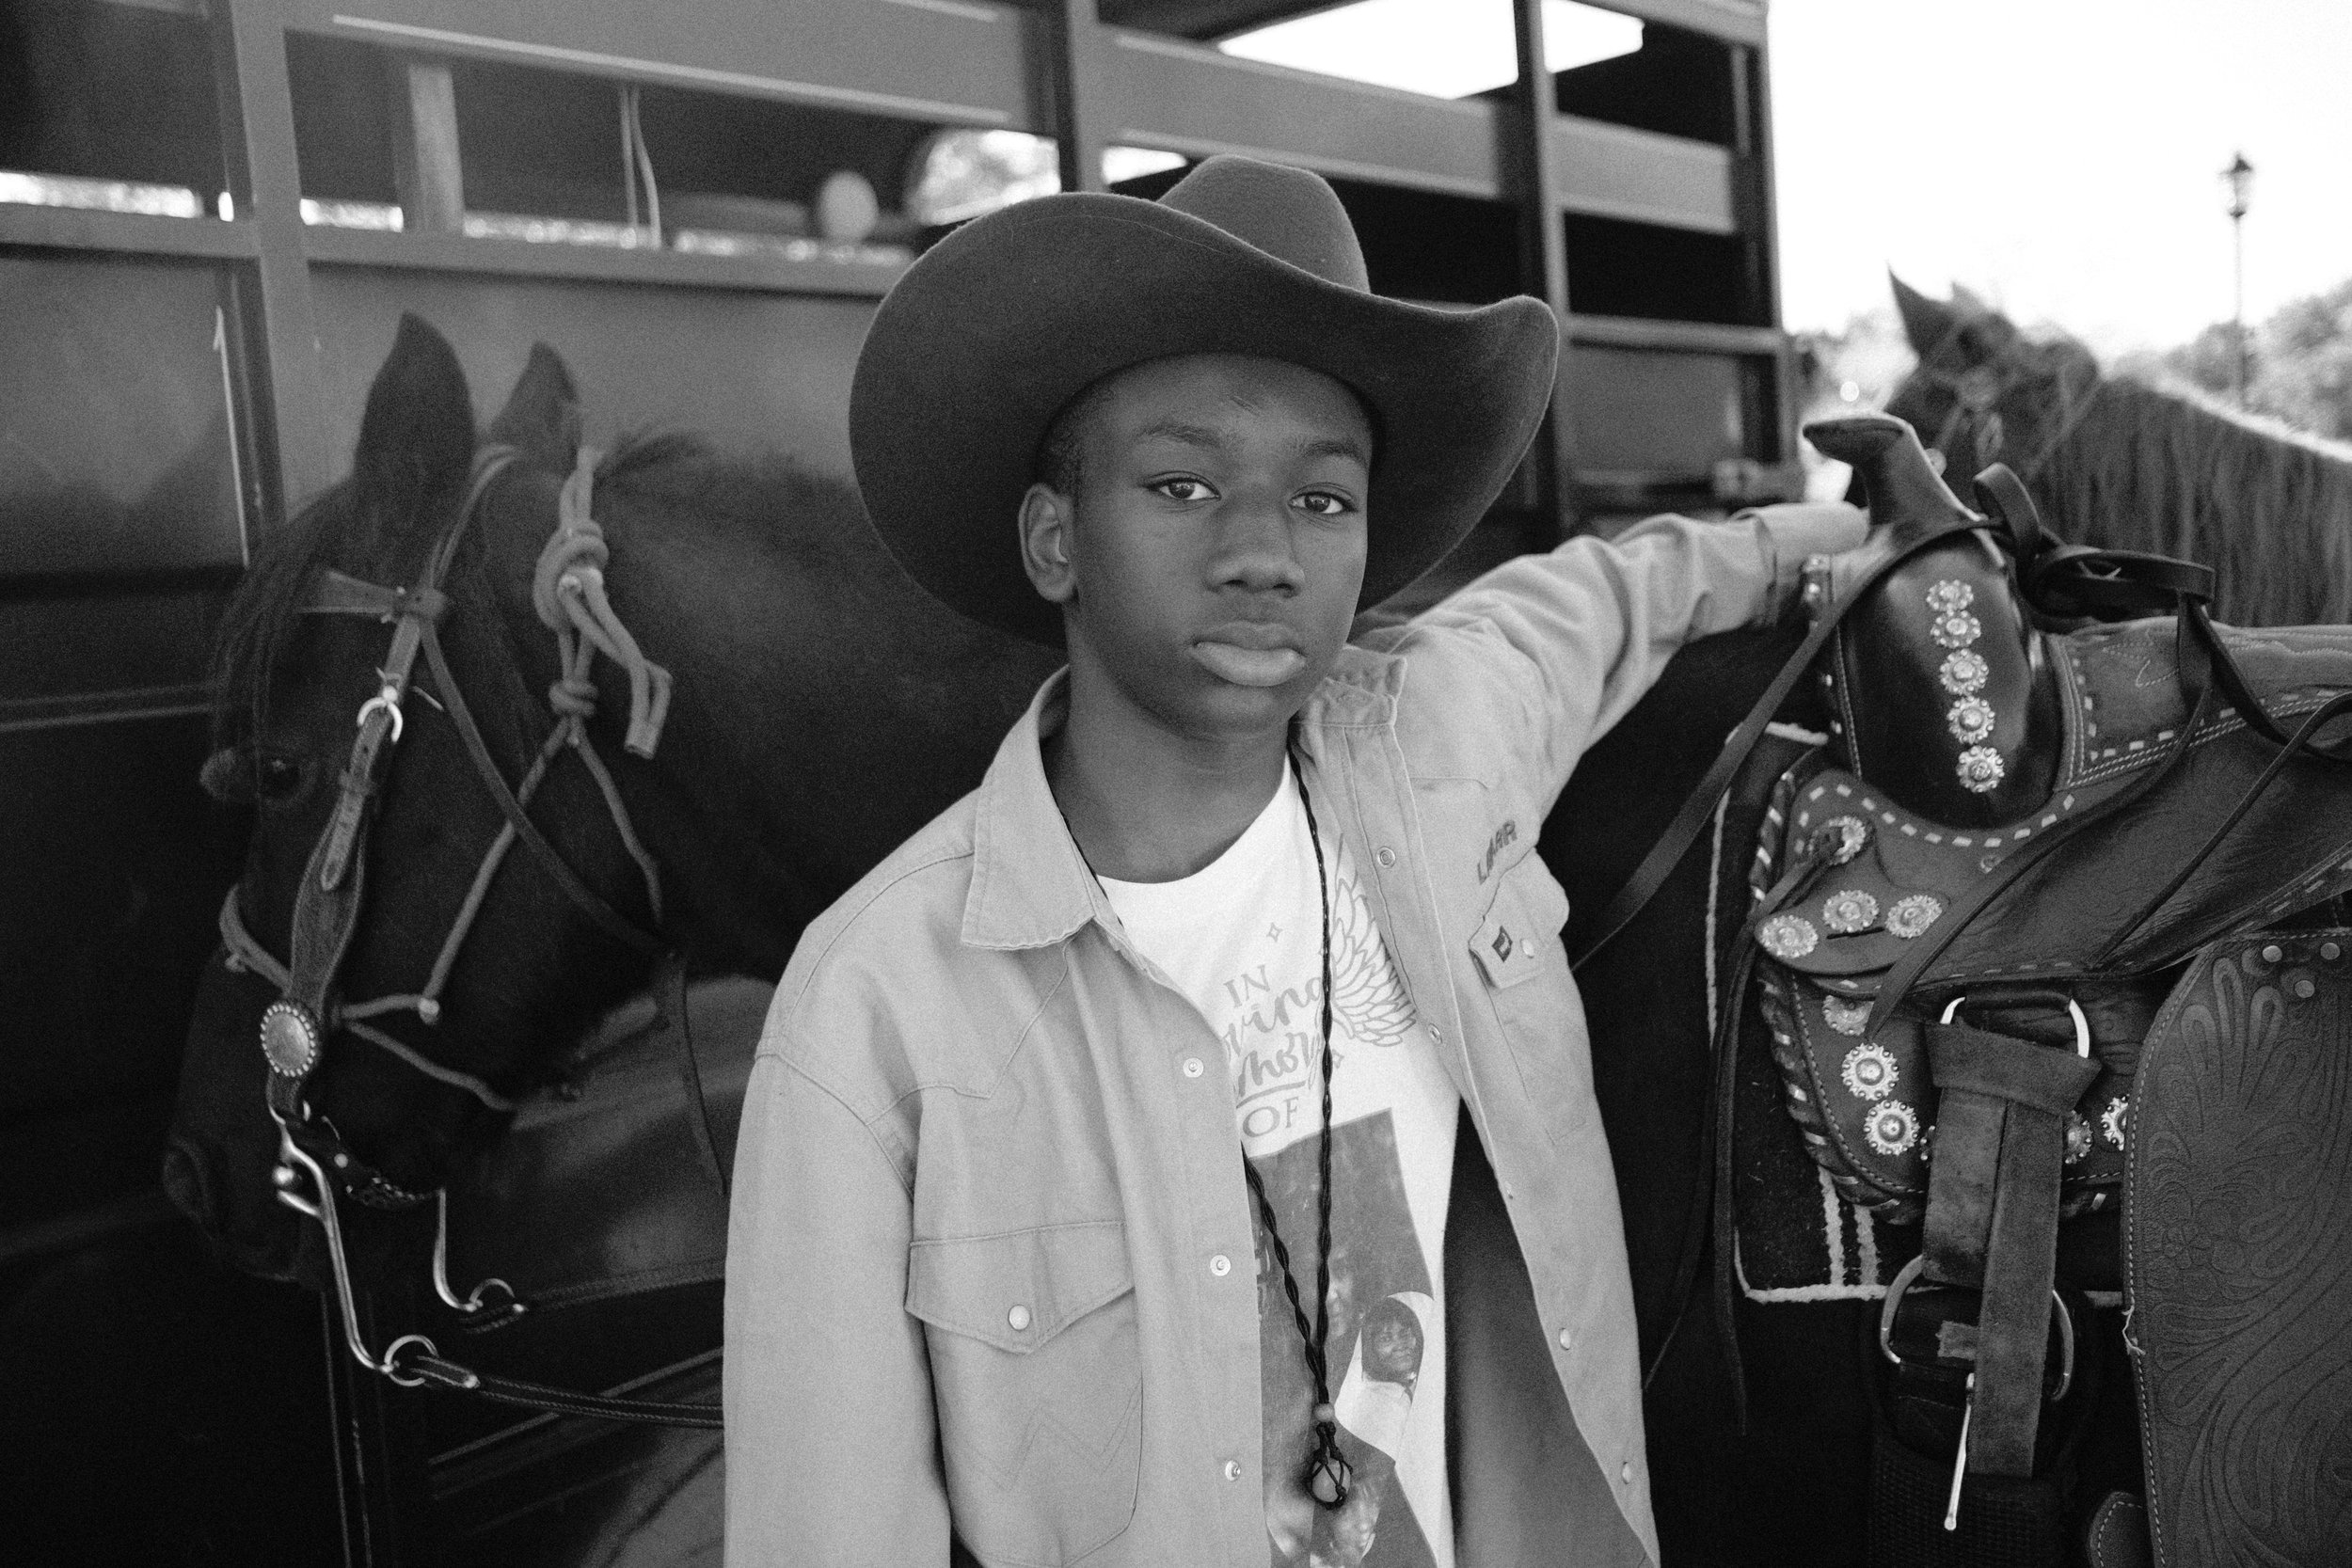 “Lavarr the Cowboy” by Chrystofer Davis